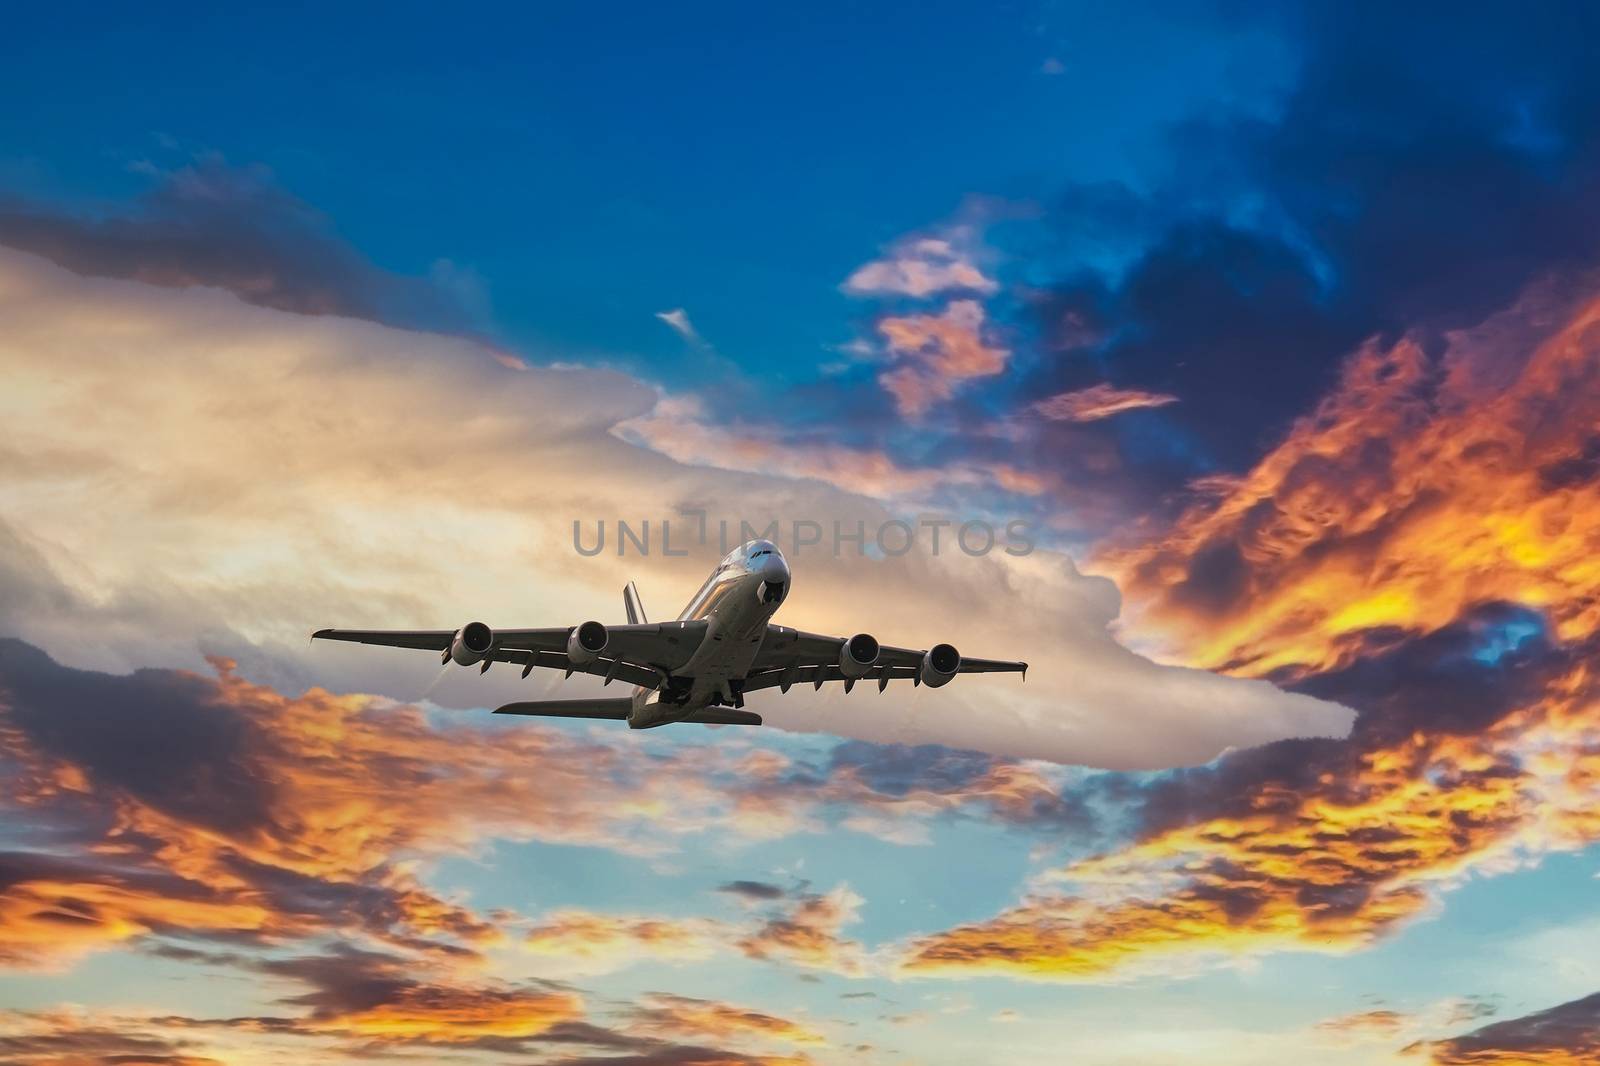 Plane Taking Off at Sunrise by dbvirago